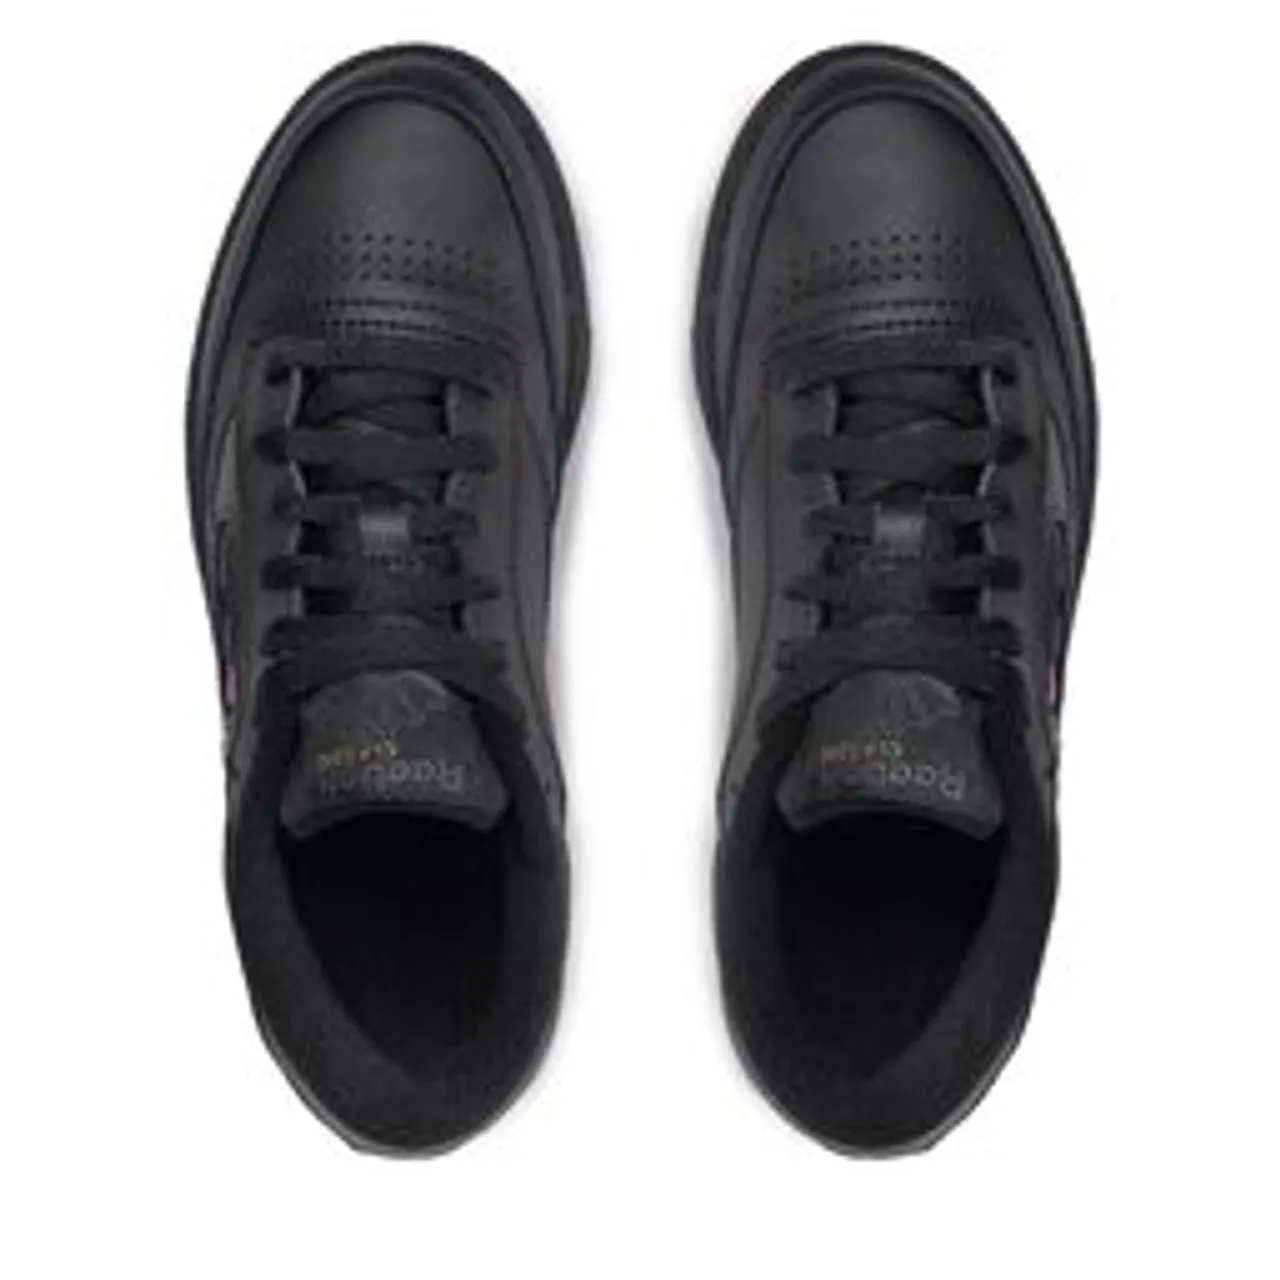 Schuhe Reebok Club C 85 AR0454 Black/Charcoal